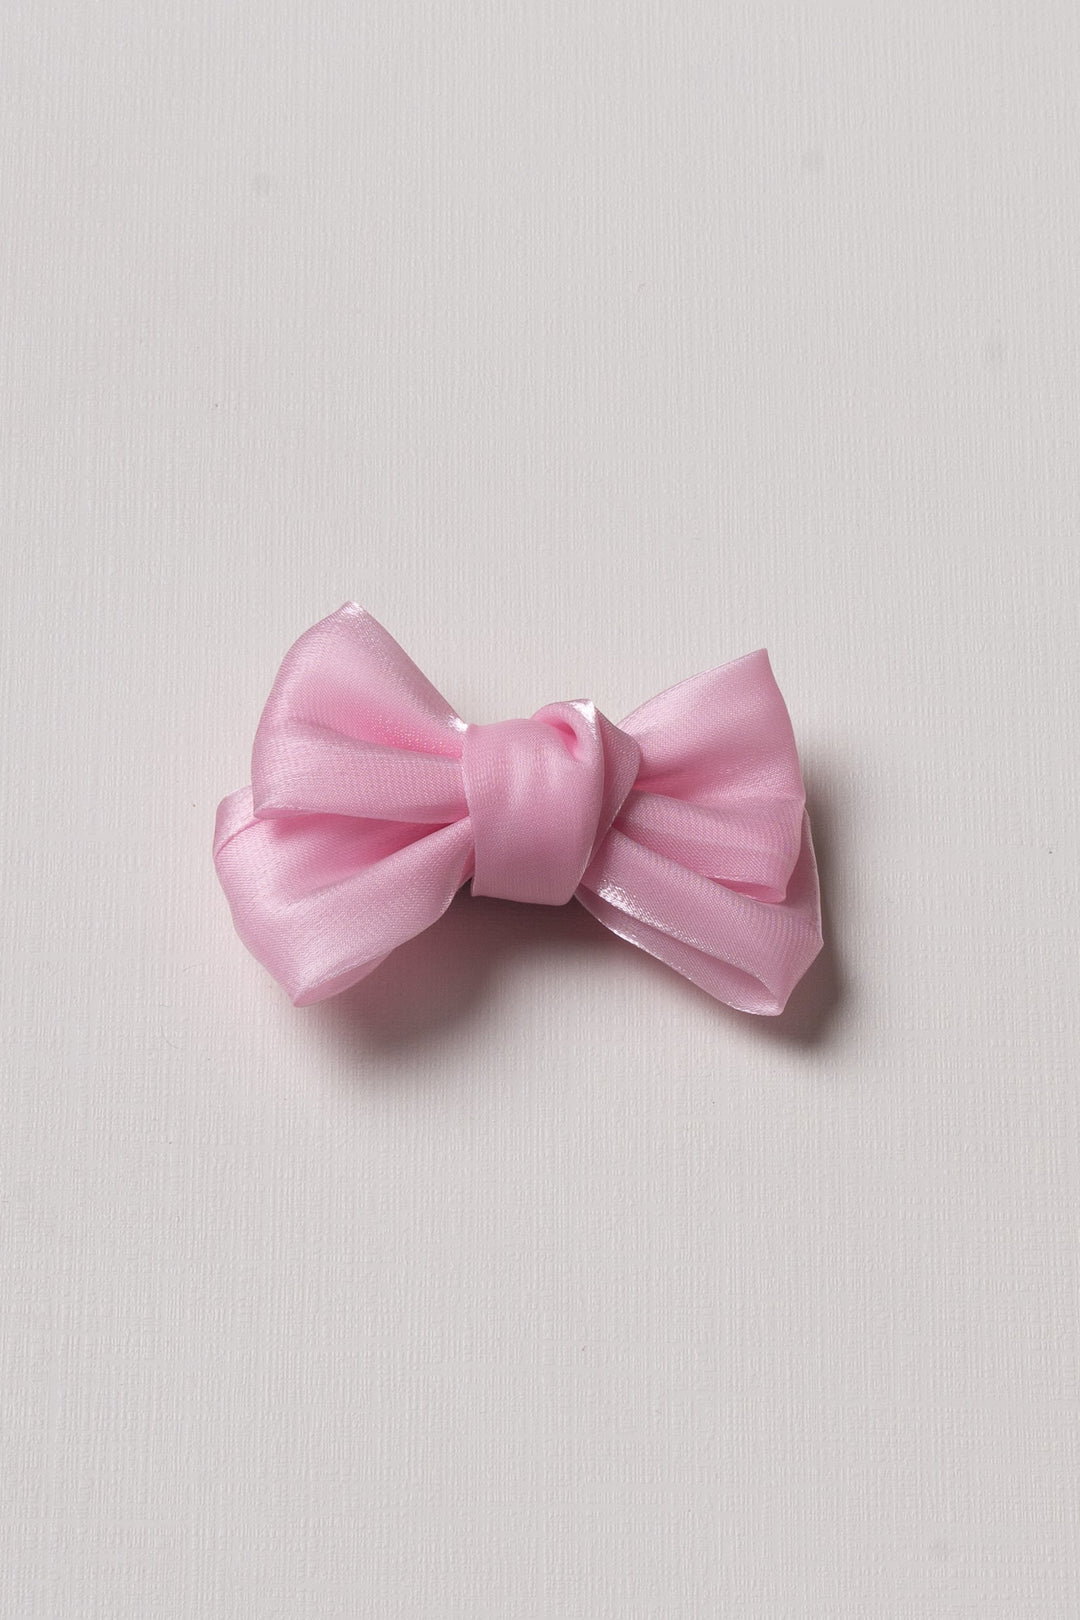 The Nesavu Hair Clip Blush Charm: Sweet Pink Satin Bow Clip Nesavu Pink JHCL77E Charming Pink Satin Bow Hair Clip for Girls | Sweet and Stylish Accessory | The Nesavu